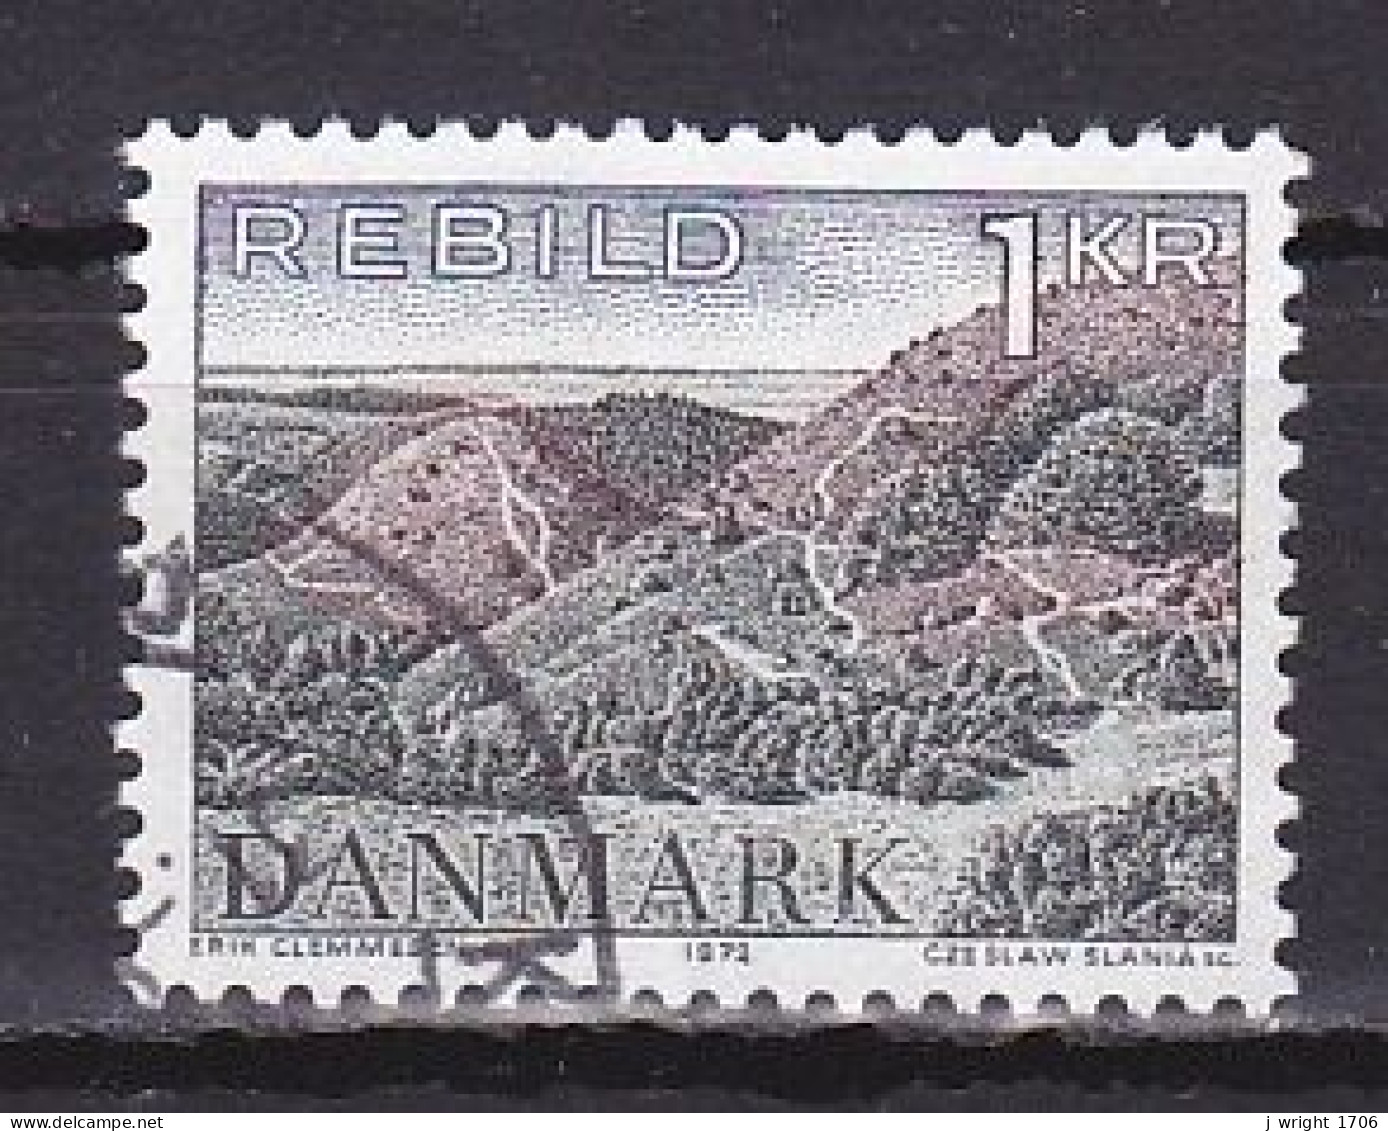 Denmark, 1972, Natural Preservation/Rebild Hills, 1kr, USED - Gebruikt